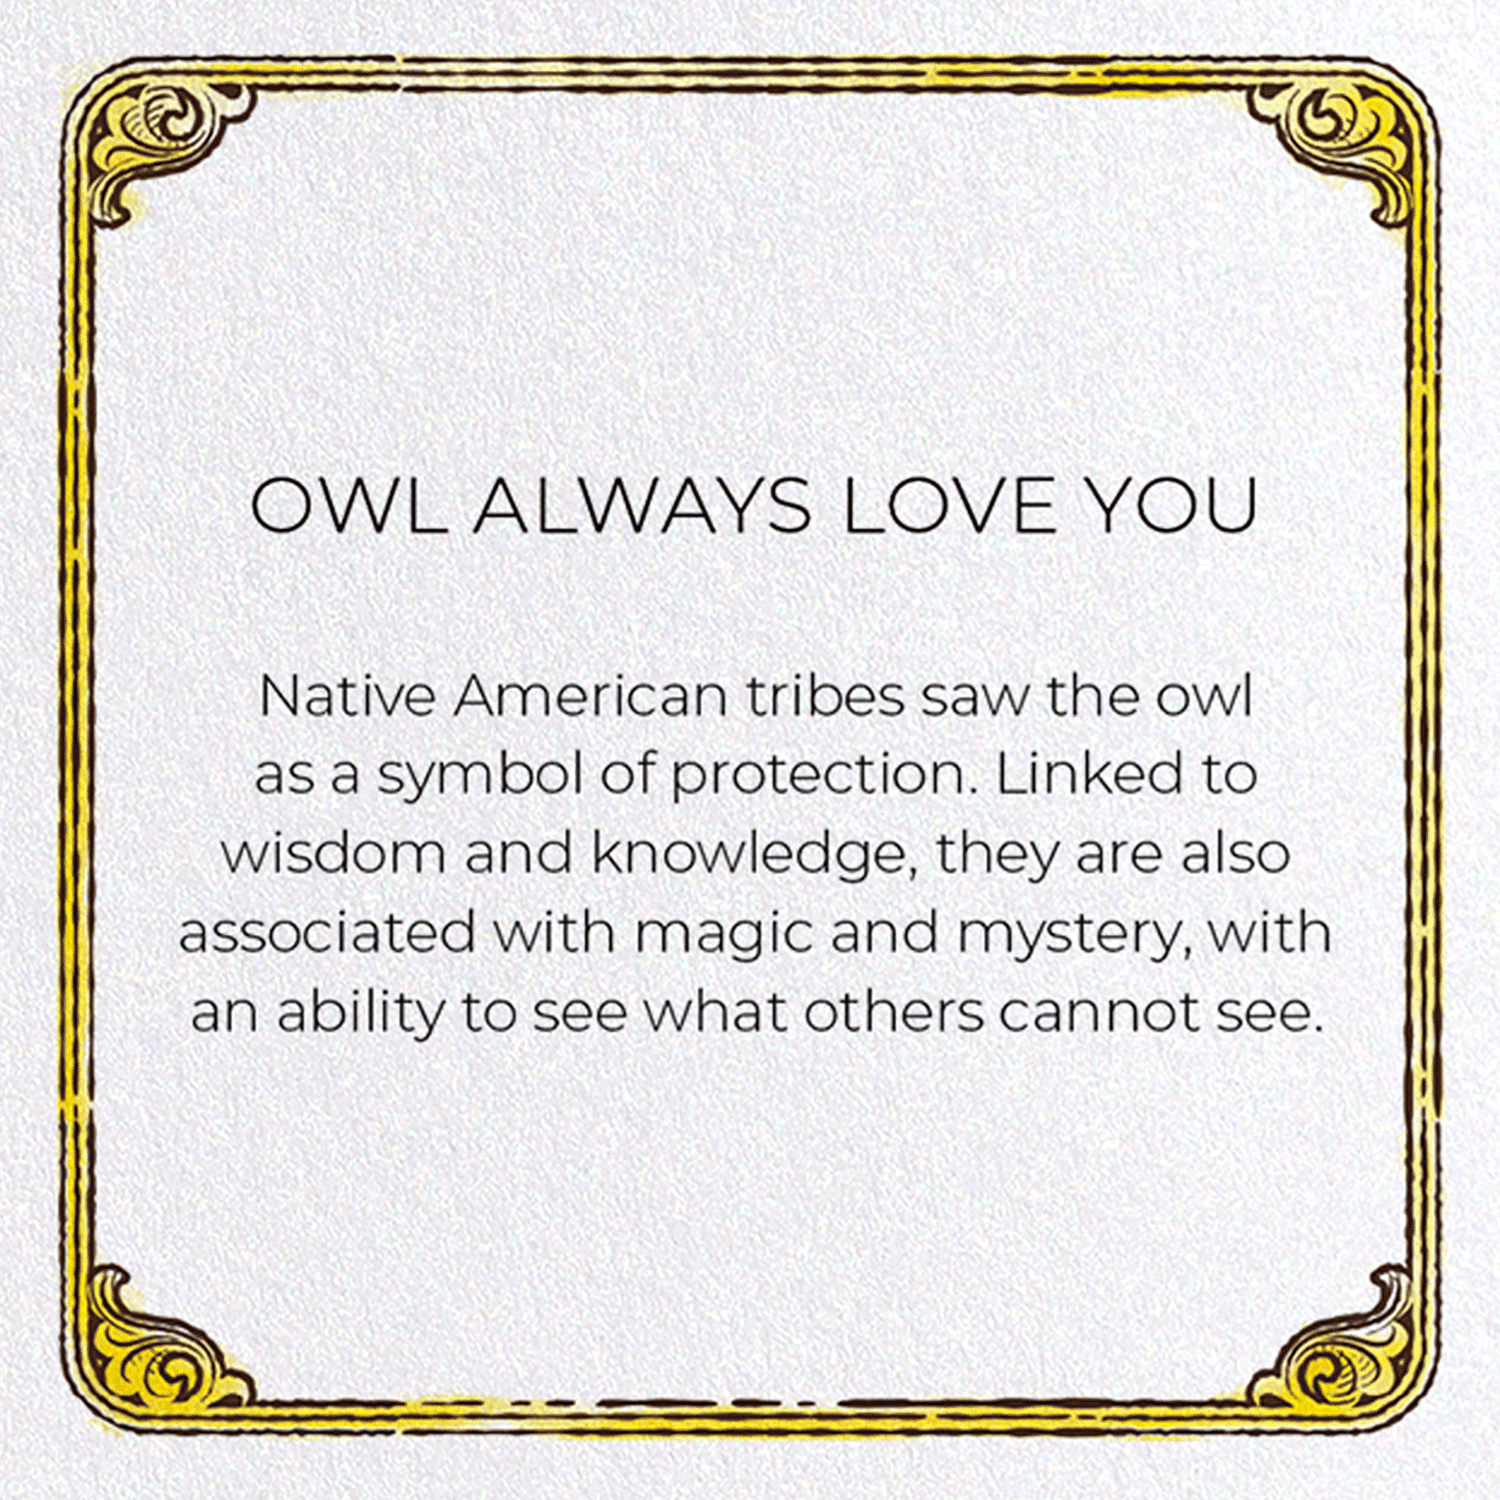 OWL ALWAYS LOVE YOU